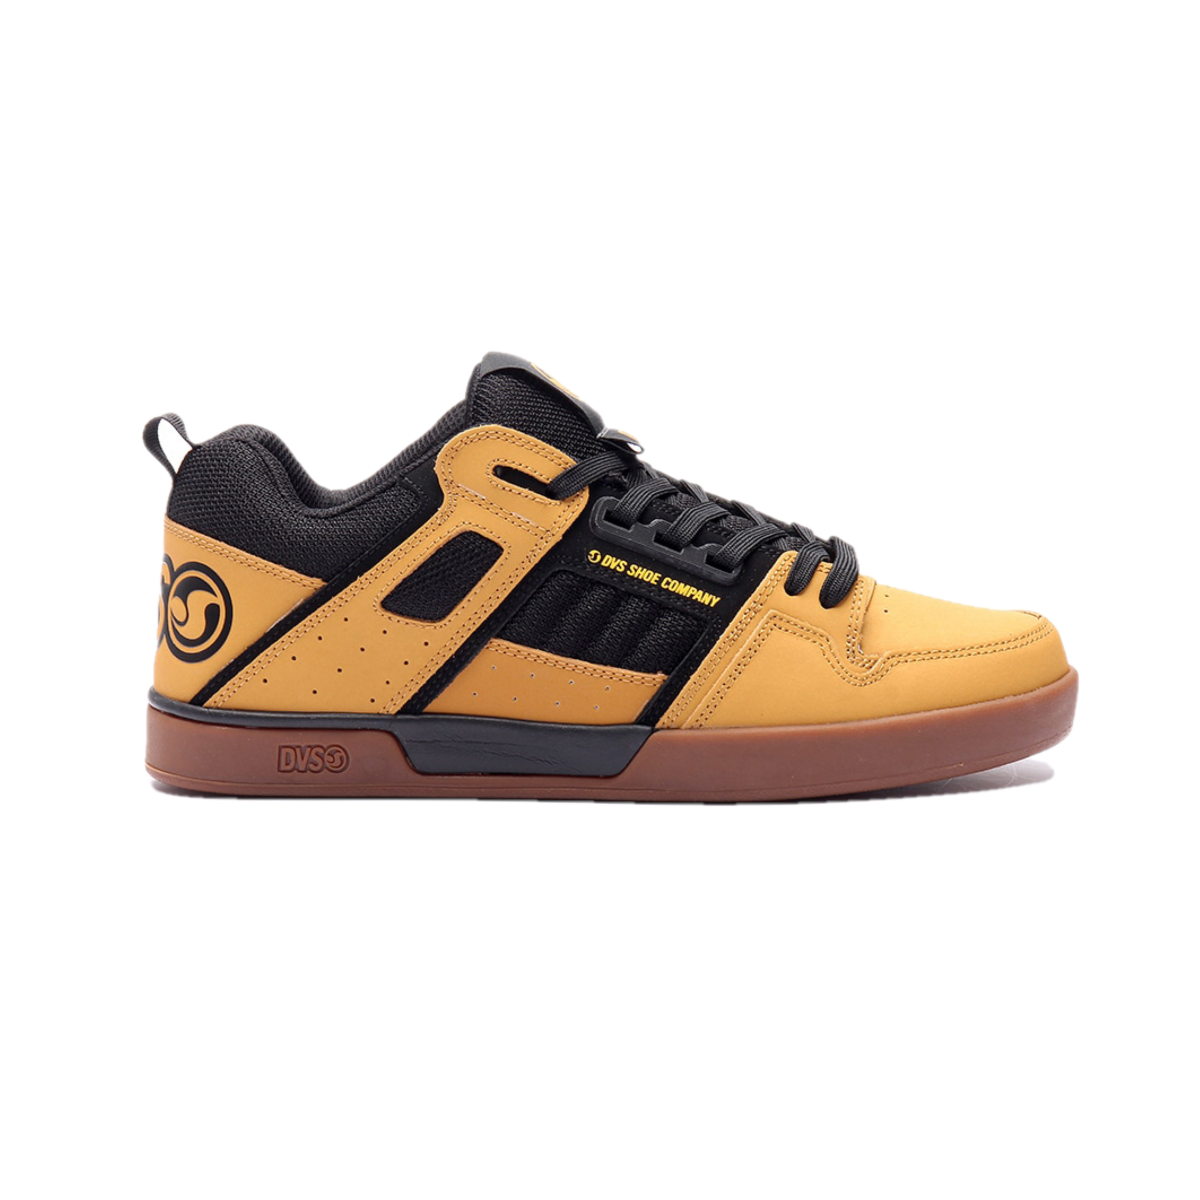 DVS F0000323260 COMANCHE 2.0+ MN'S (Medium) Chamois/Black/Gum Leather Skate Shoes